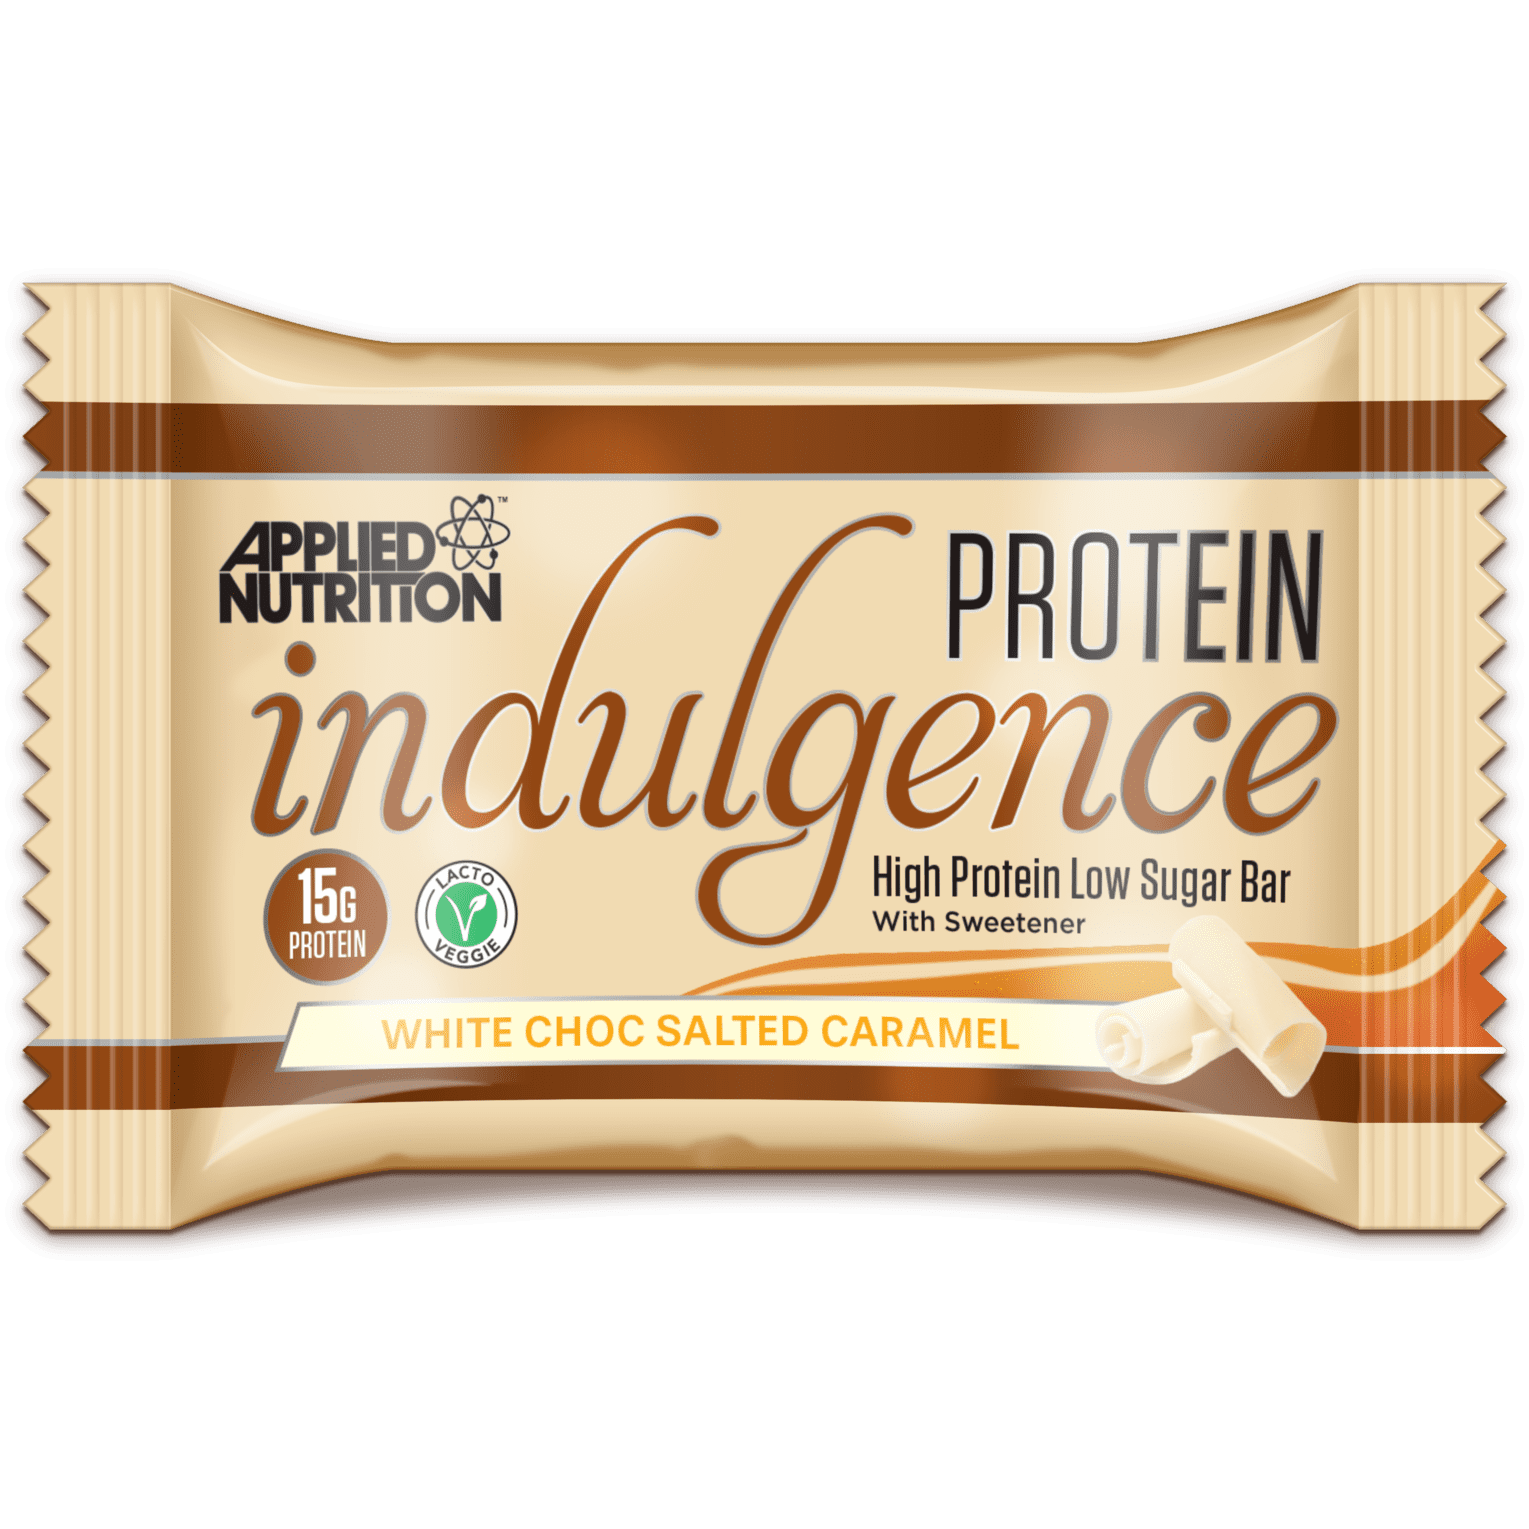 Applied Nutrition Protein Indulgence Bar, White Choc Salted Caramel, 1 Bar